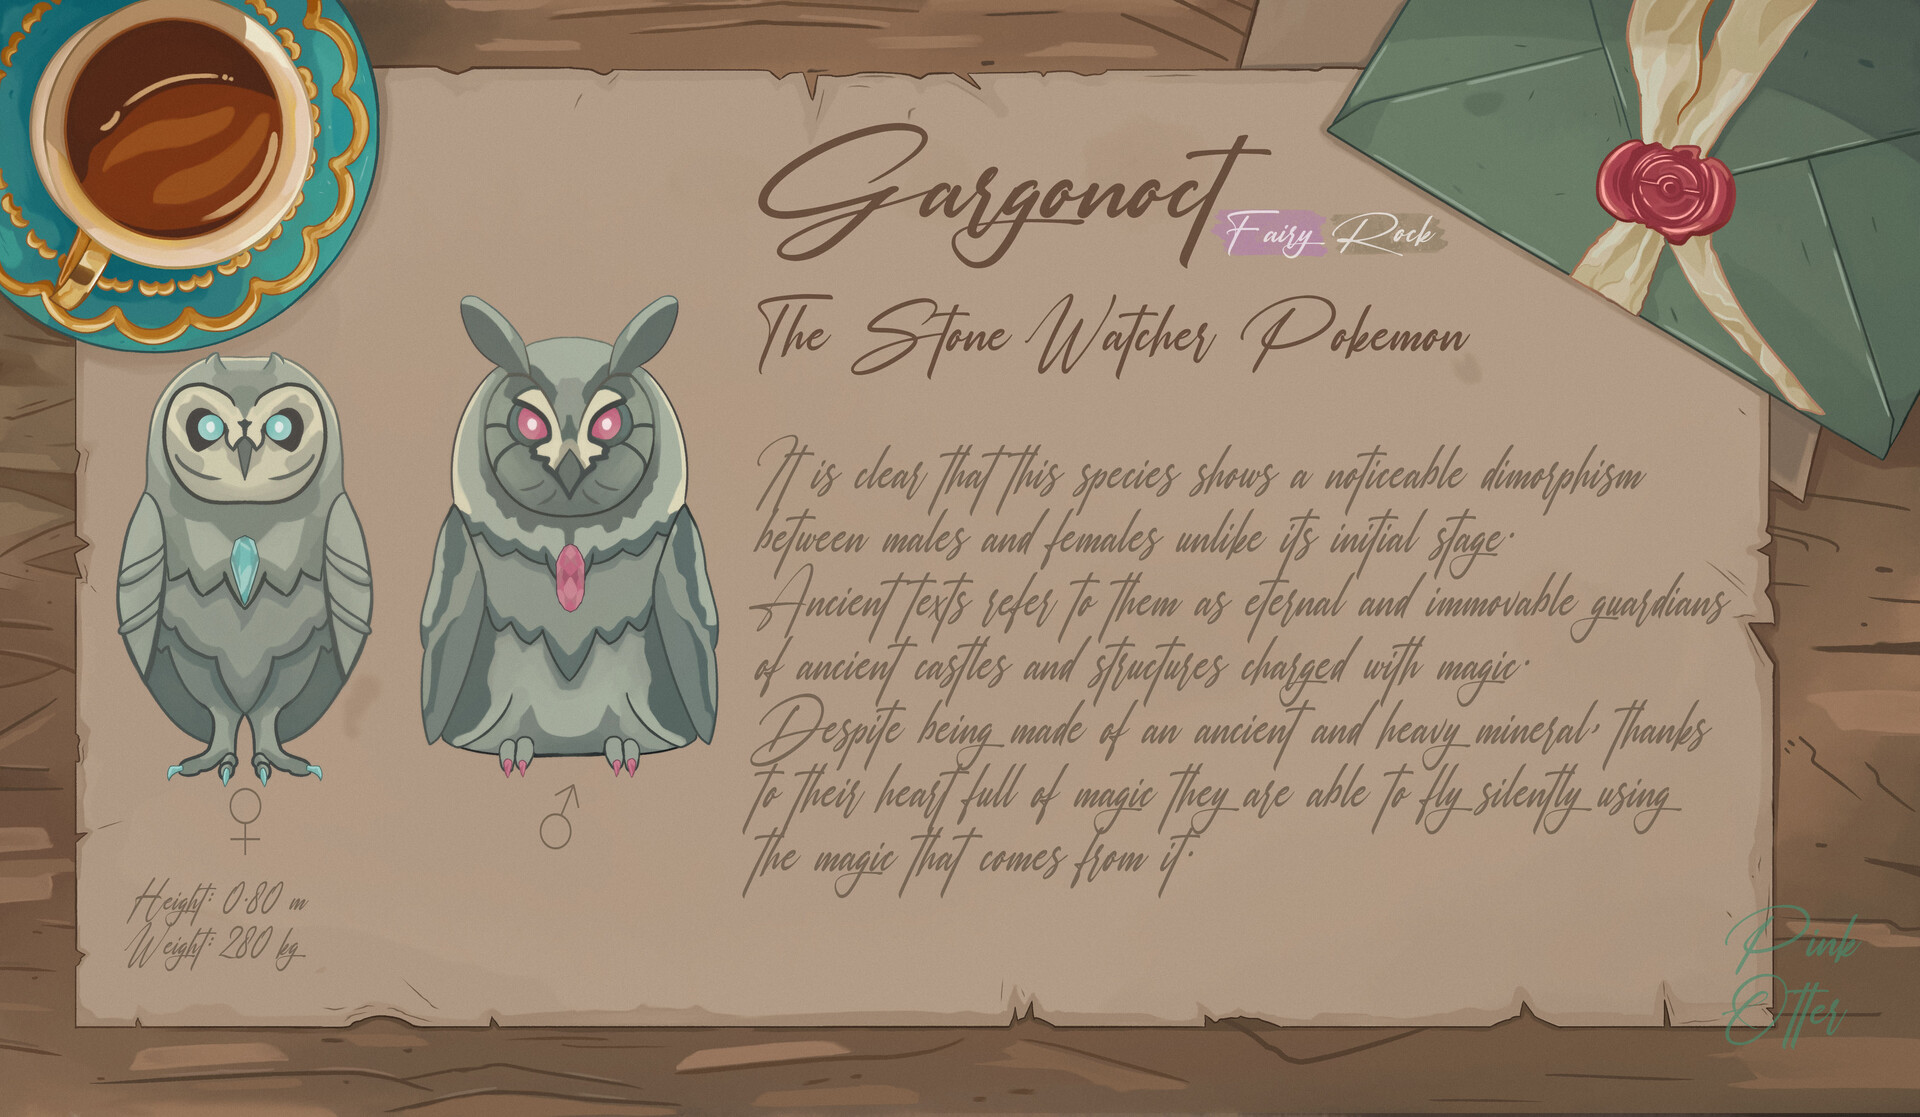 ArtStation - Gargonoct, The Stone Watcher Pokemon